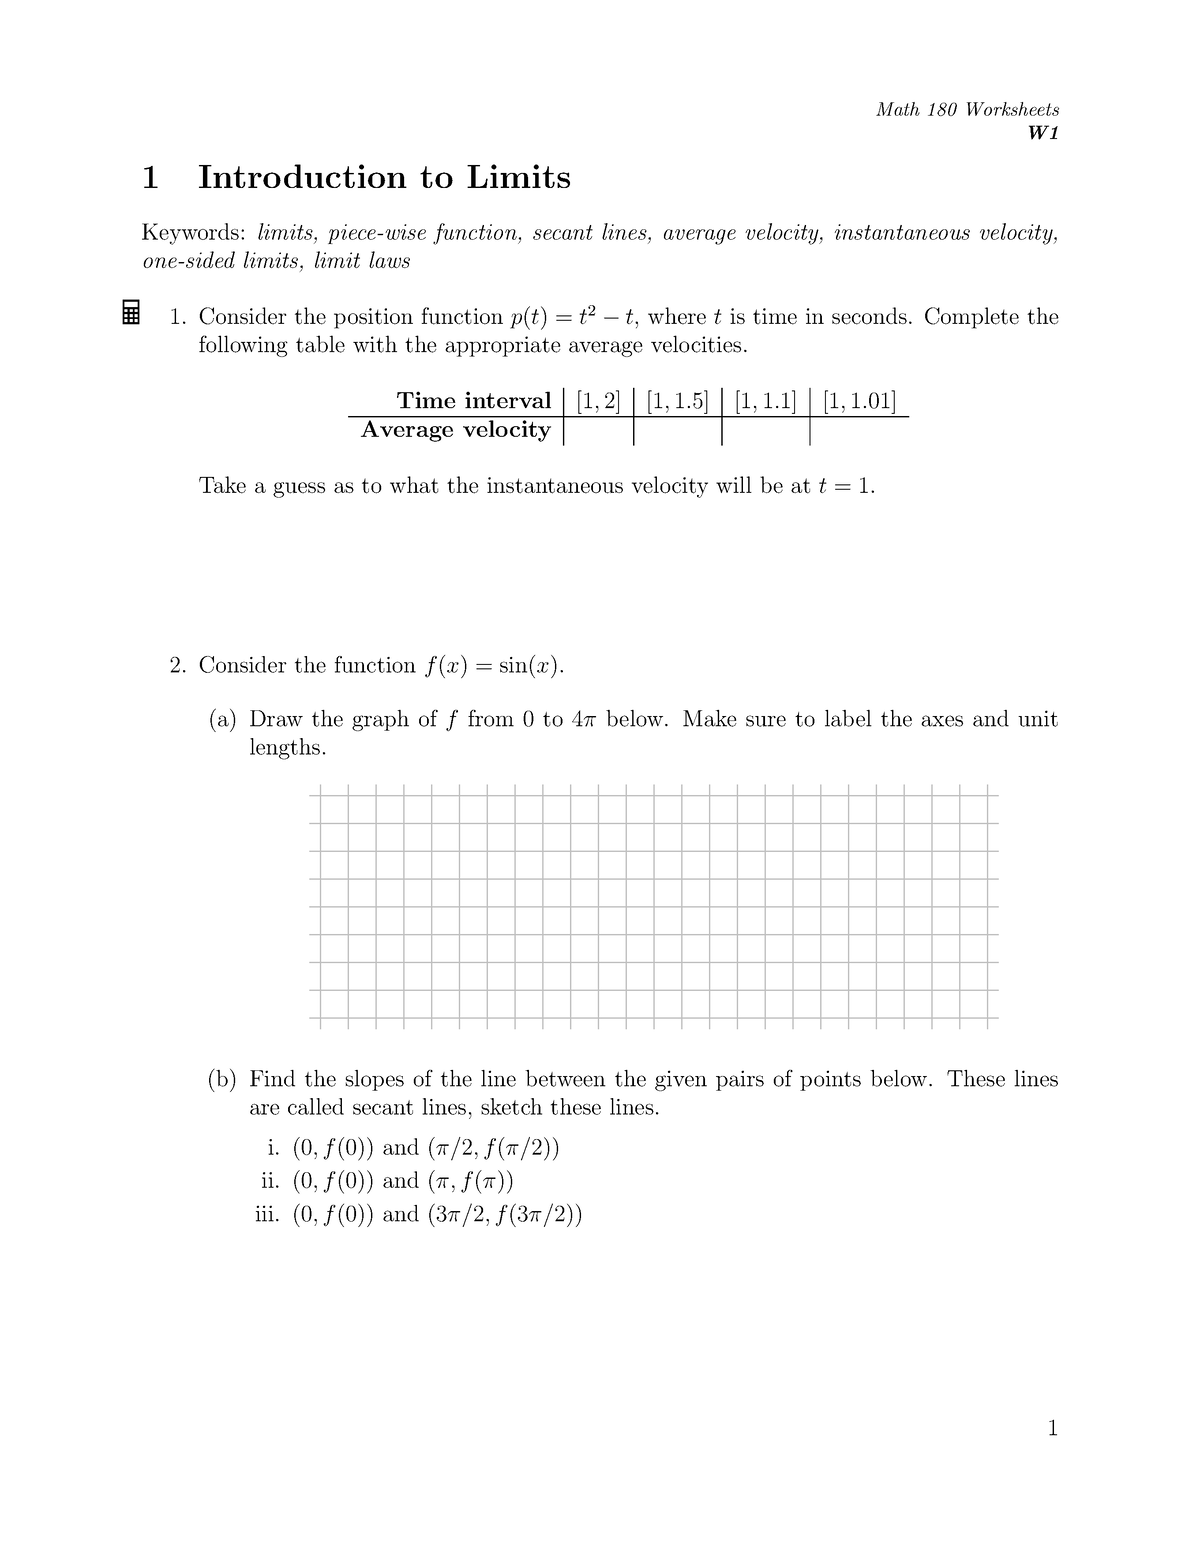 Uic Math 180 Worksheets